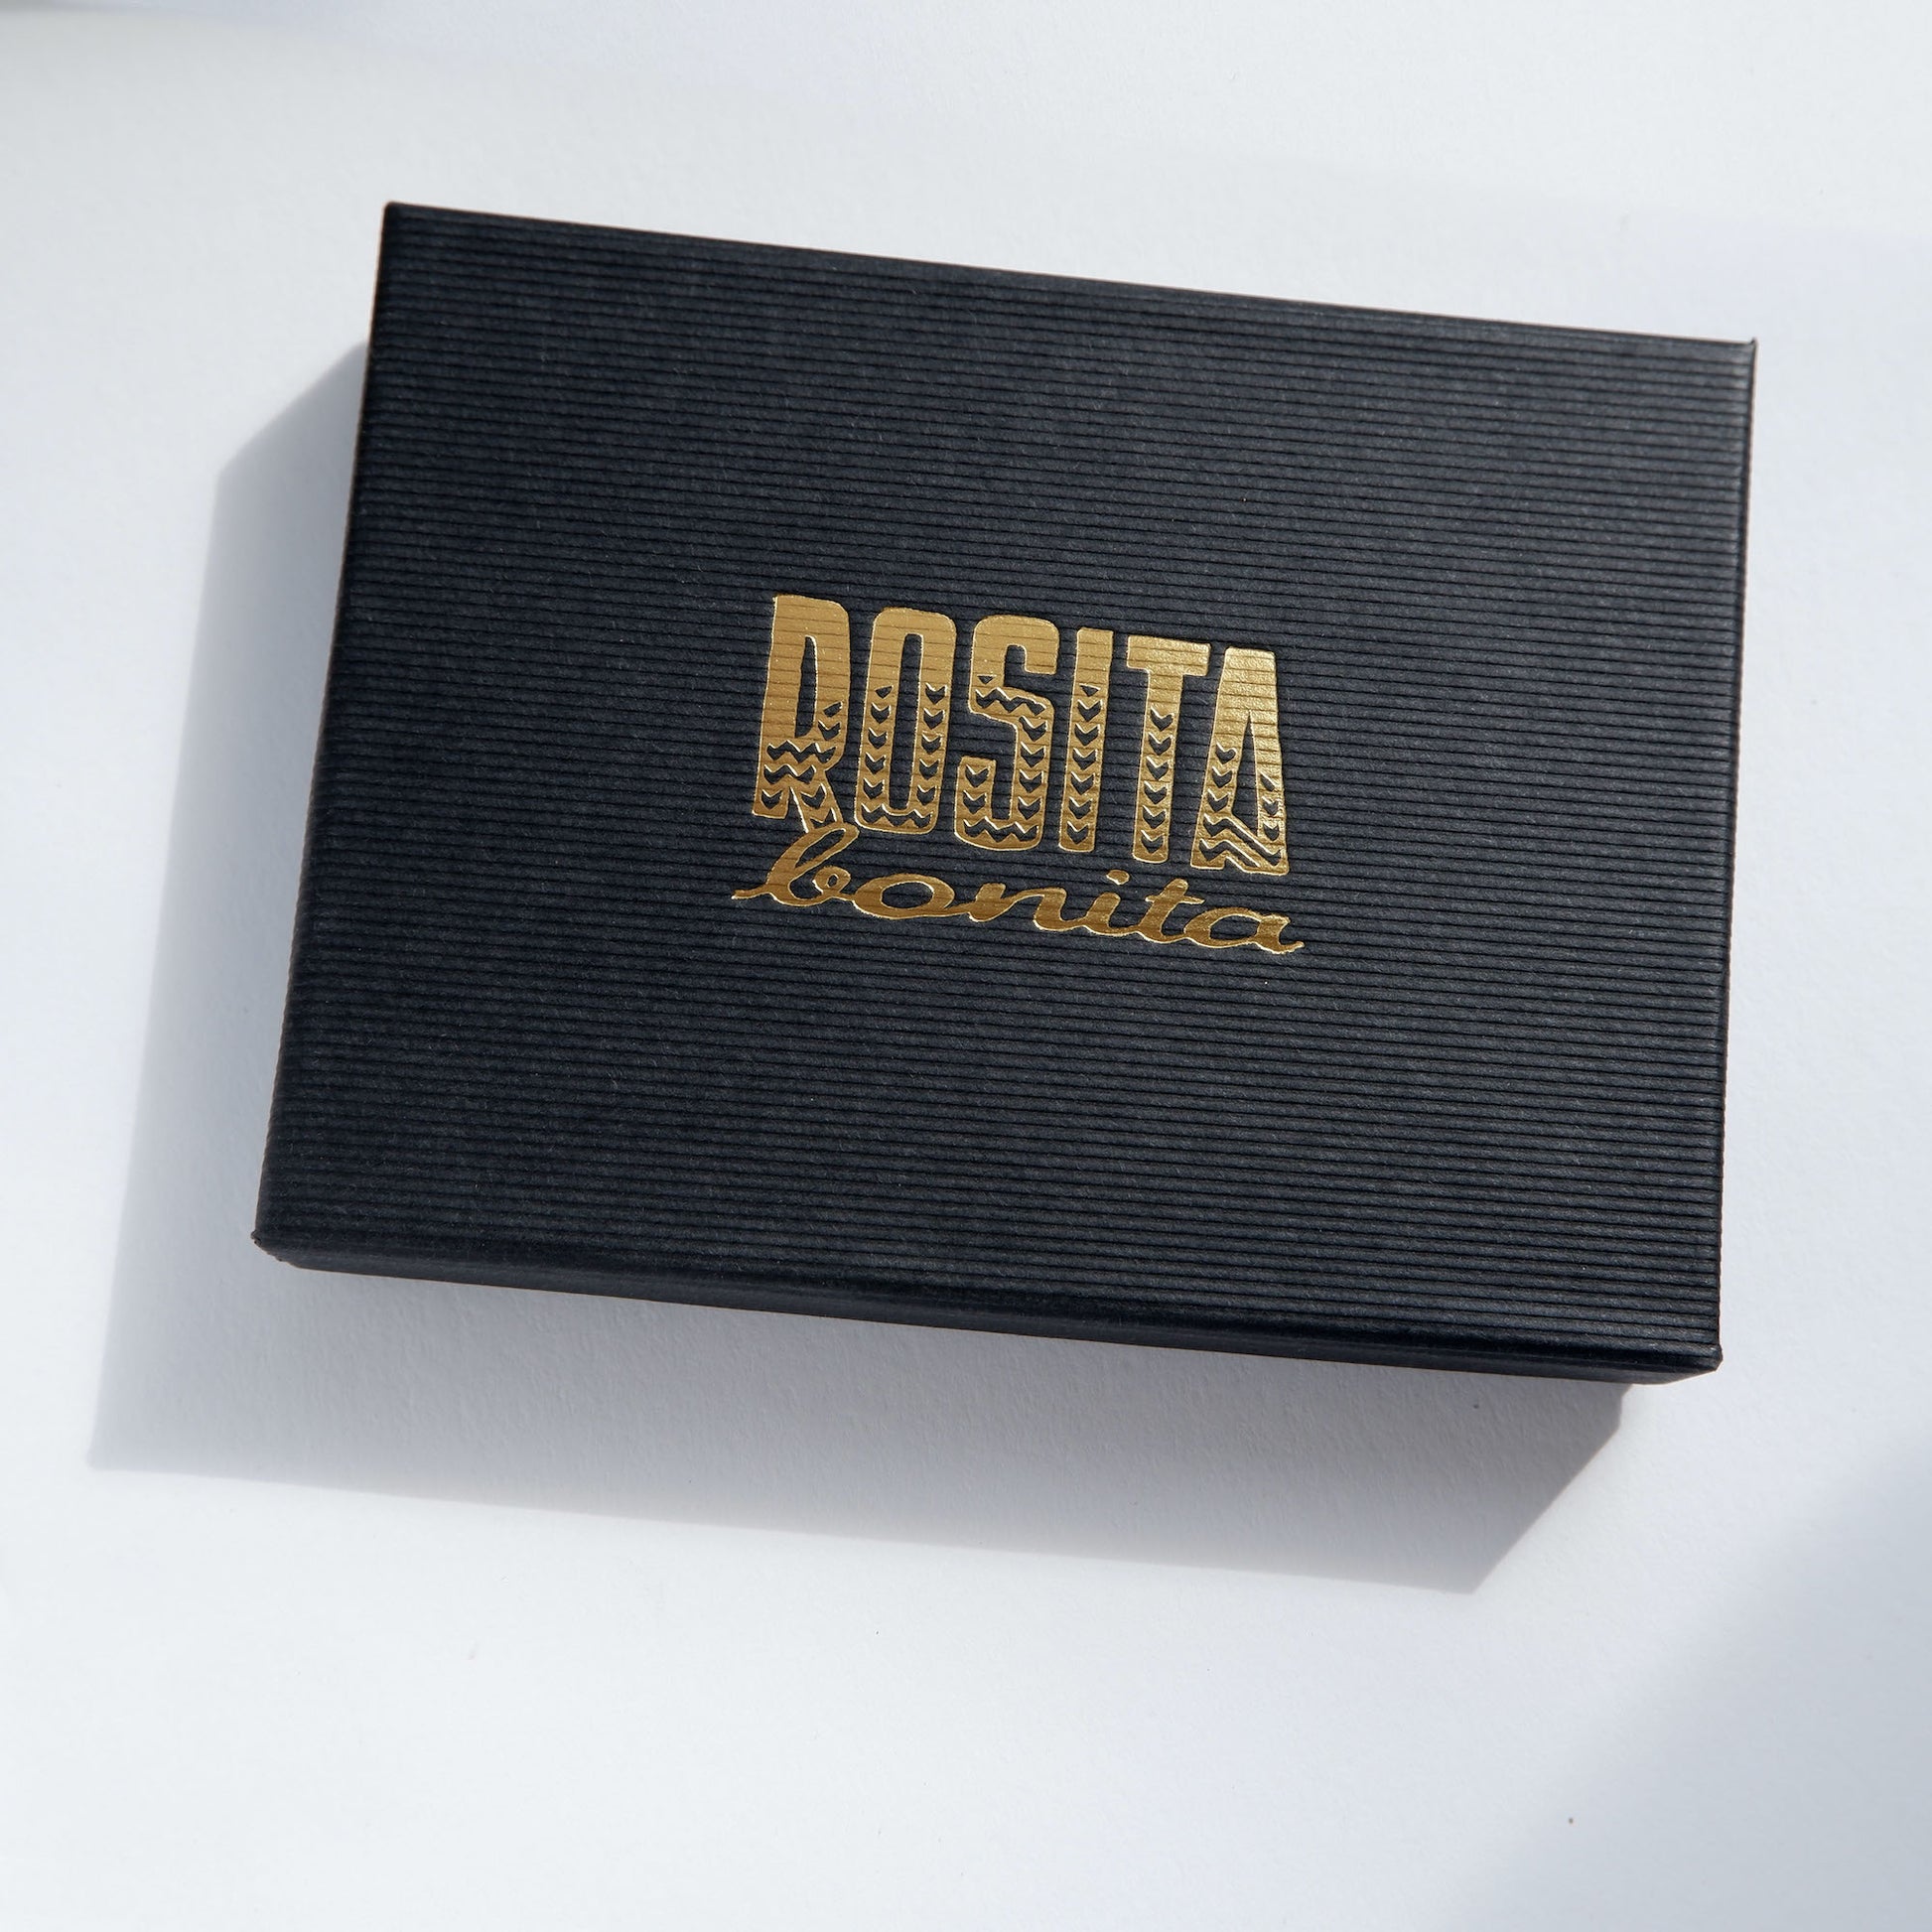 black cardboard box with Rosita Bonita log in gold